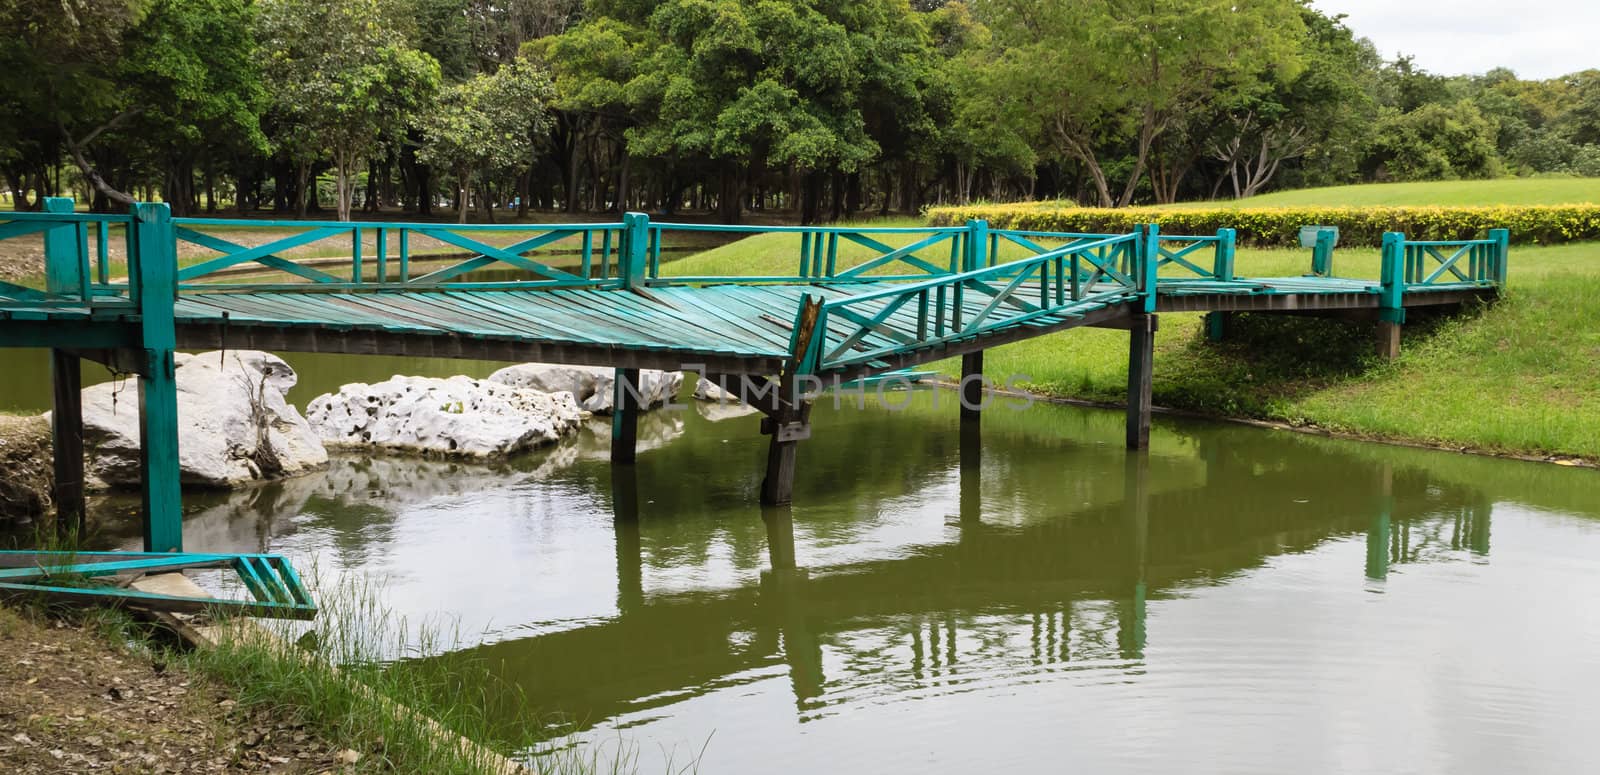 Damaged Old Green Bridge in the Park by punpleng